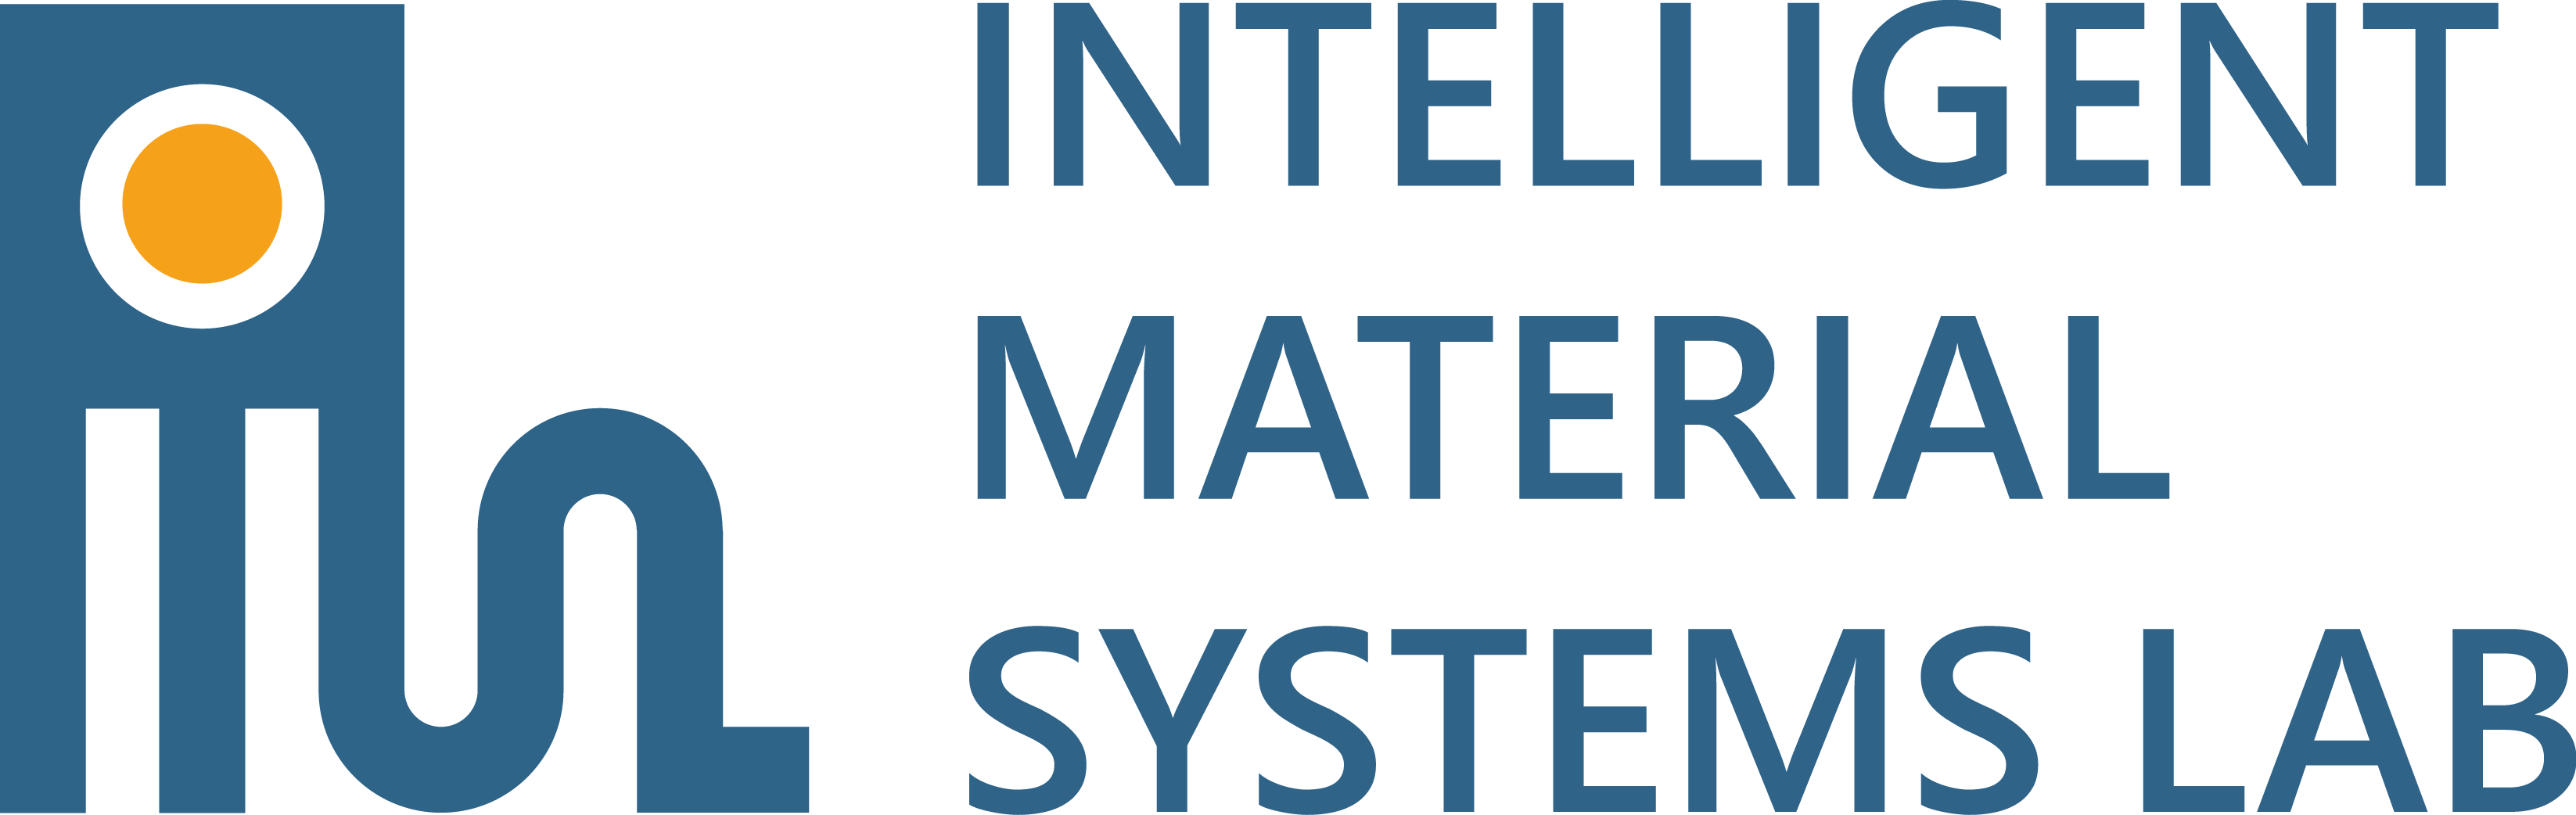 iMSL – Intelligent Material Systems Lab – Lehrstuhl für intelligente Materialsysteme an der Universität des Saarlandes